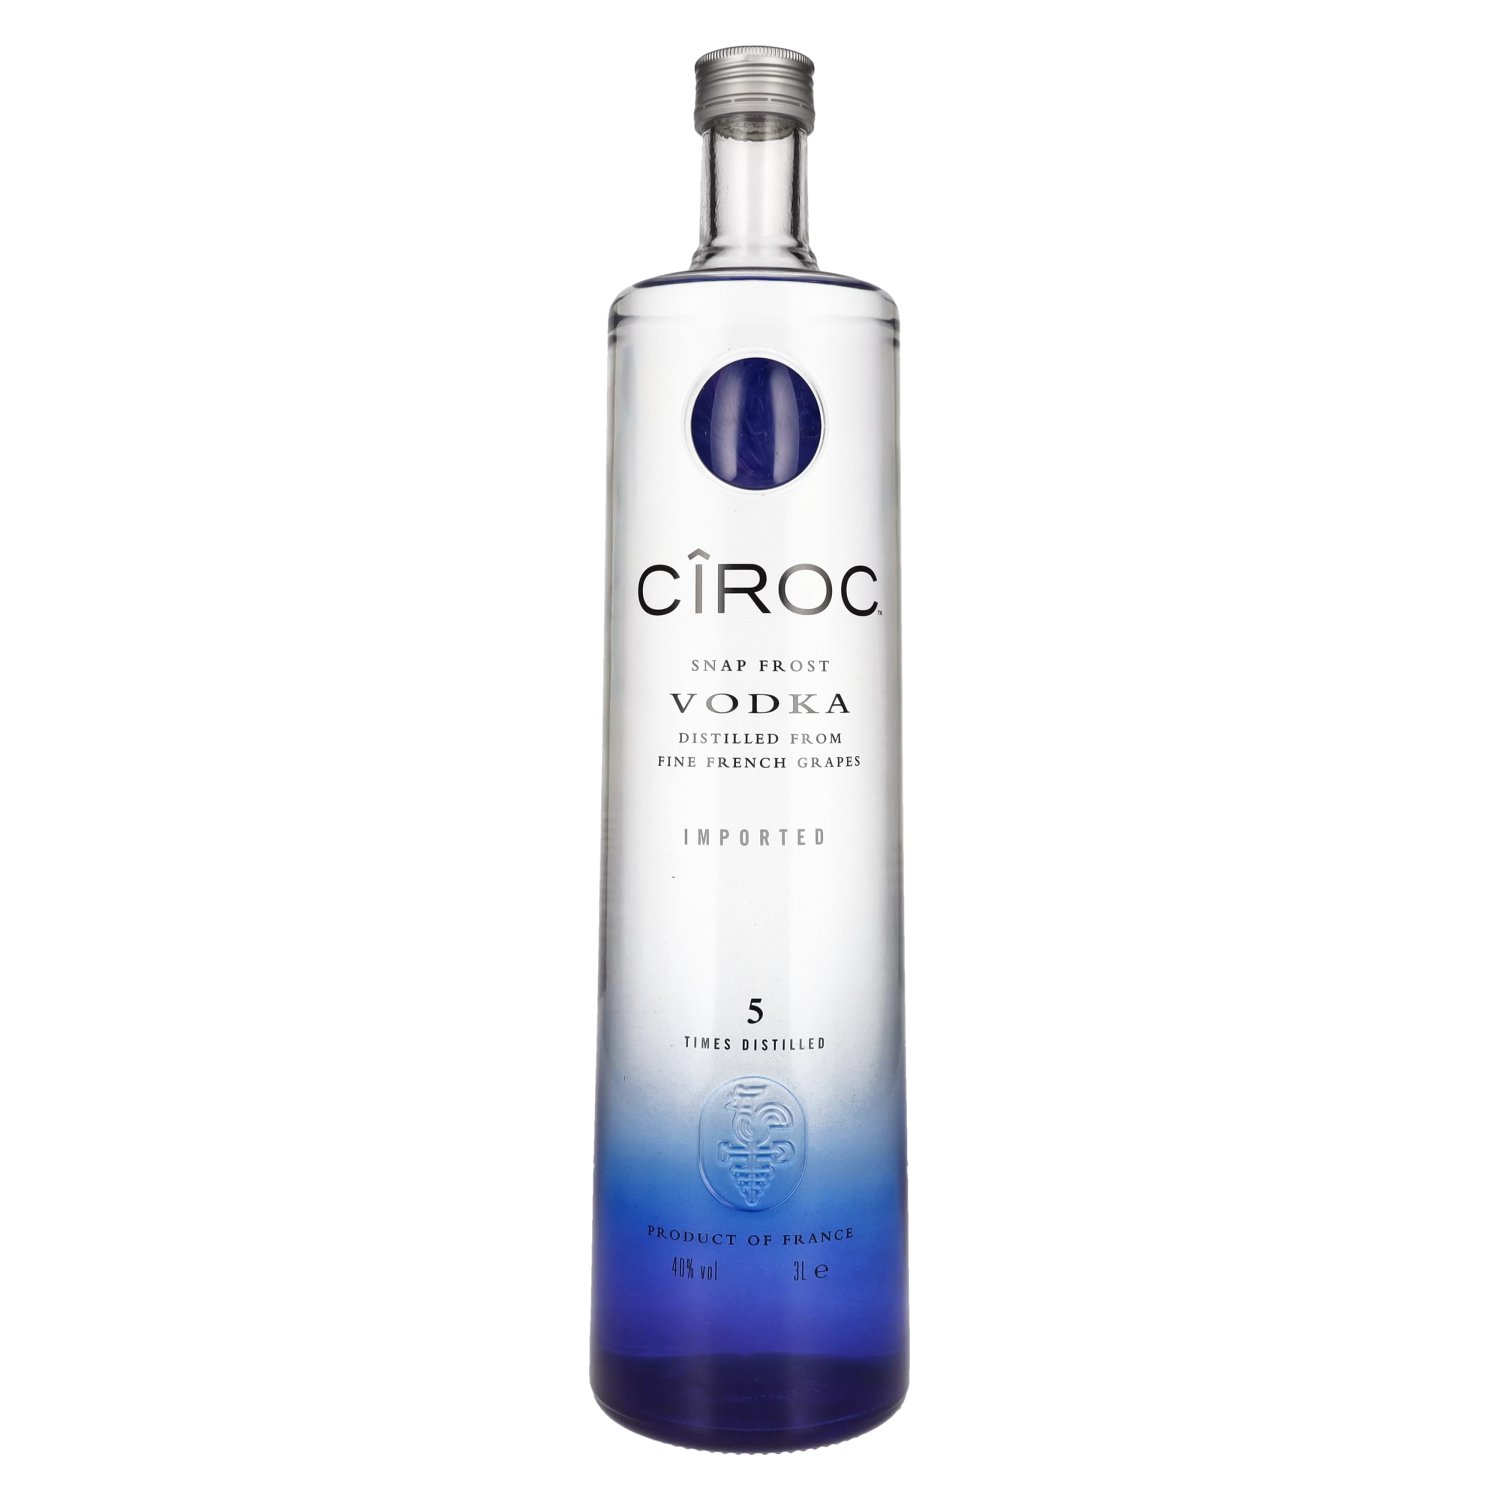 Cîroc SNAP FROST Vodka 40% 3l - Vol. delicando